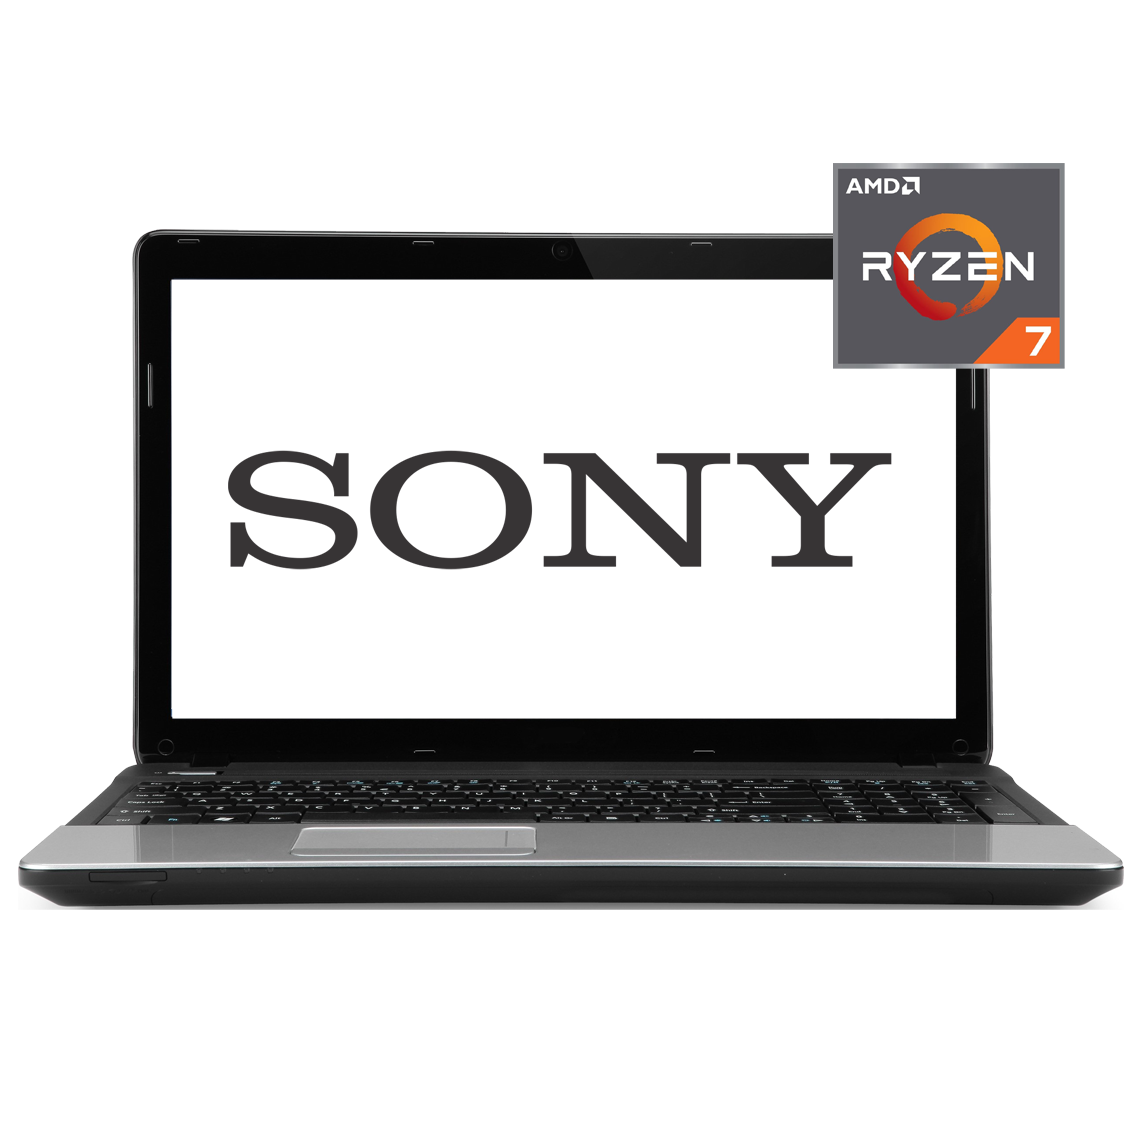 Sony - 15.6 inch AMD Ryzen 7